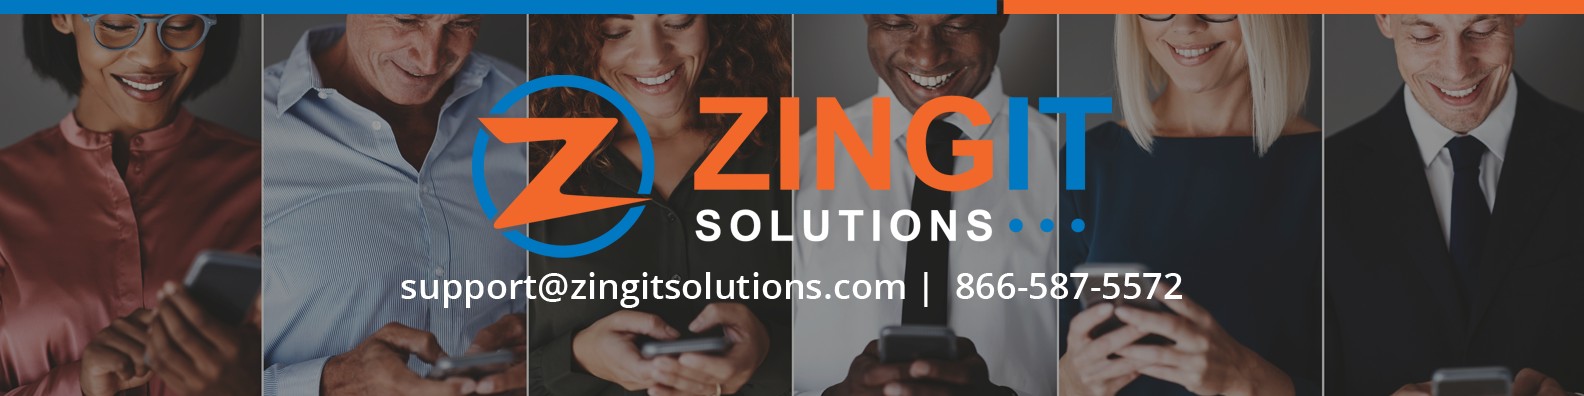 Zingit Solutions | LinkedIn